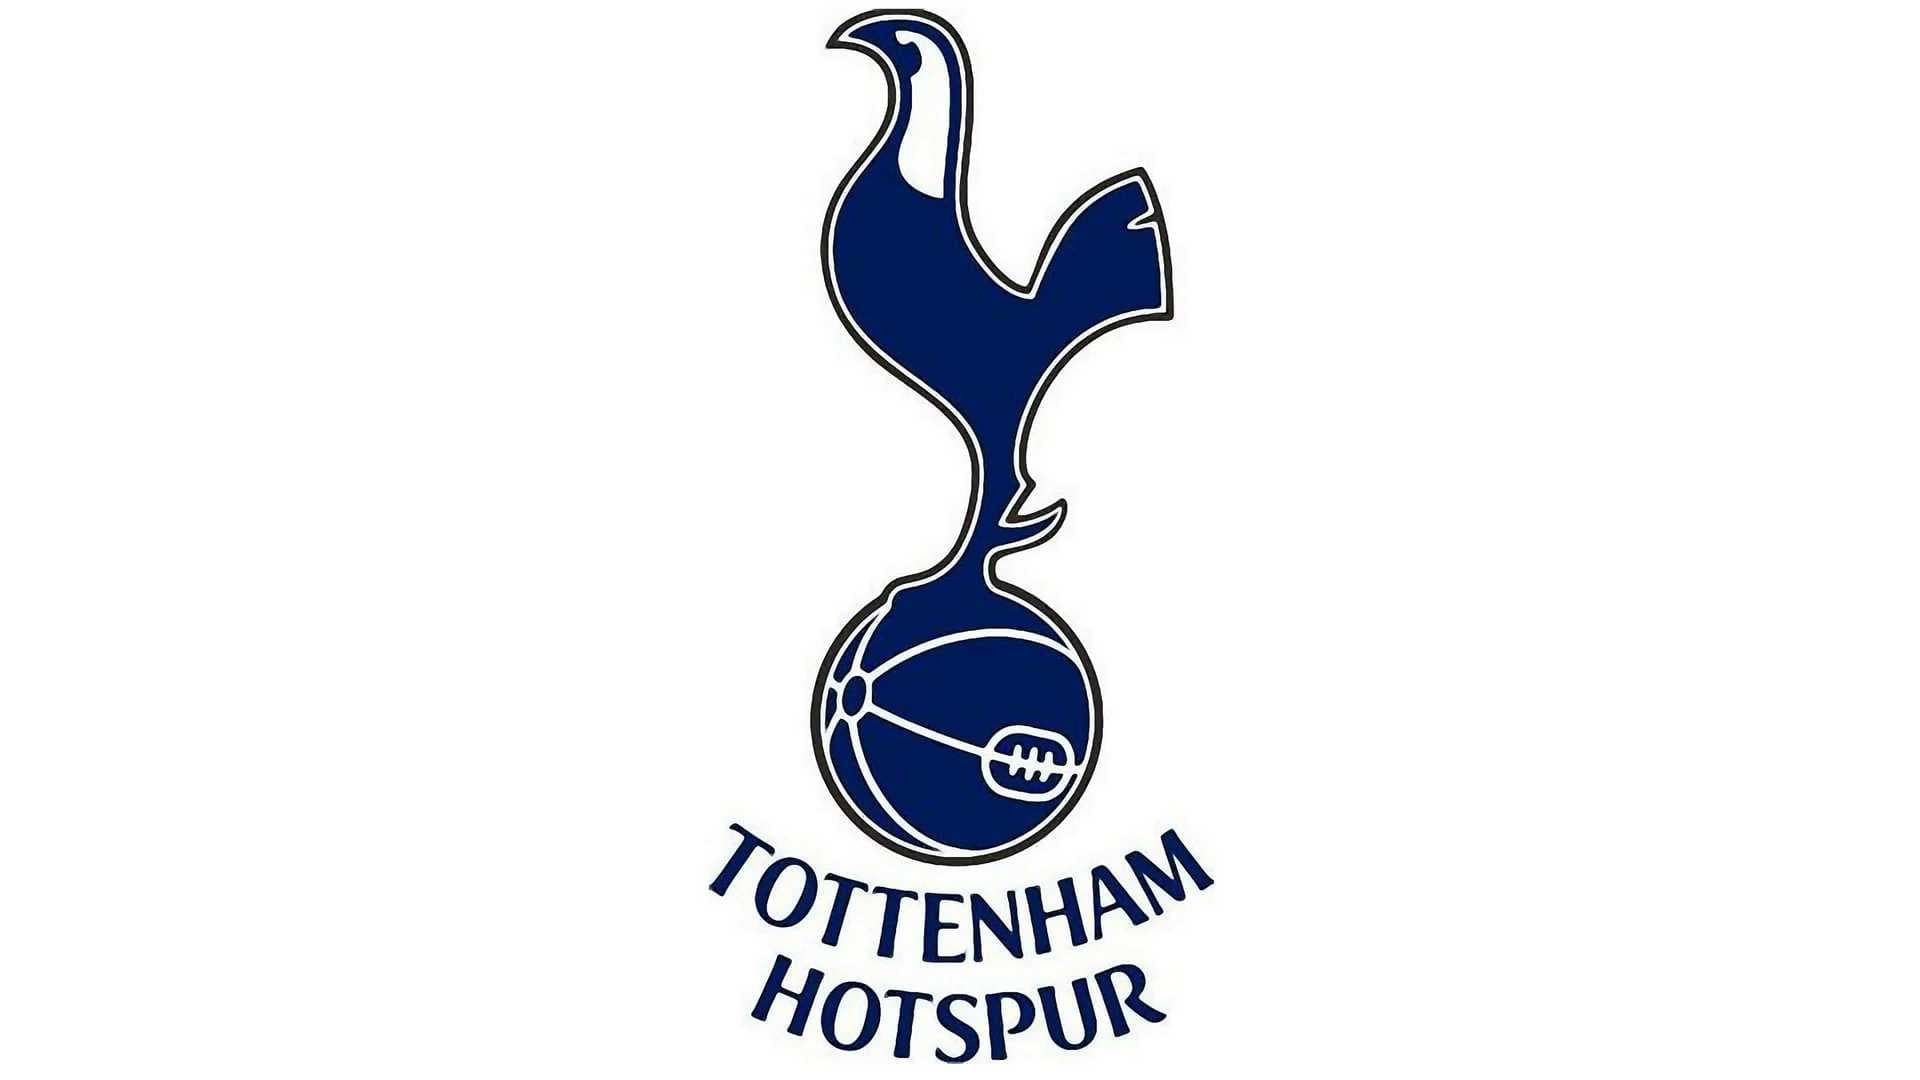 Tottenham Hotspur - Premier League teams in London